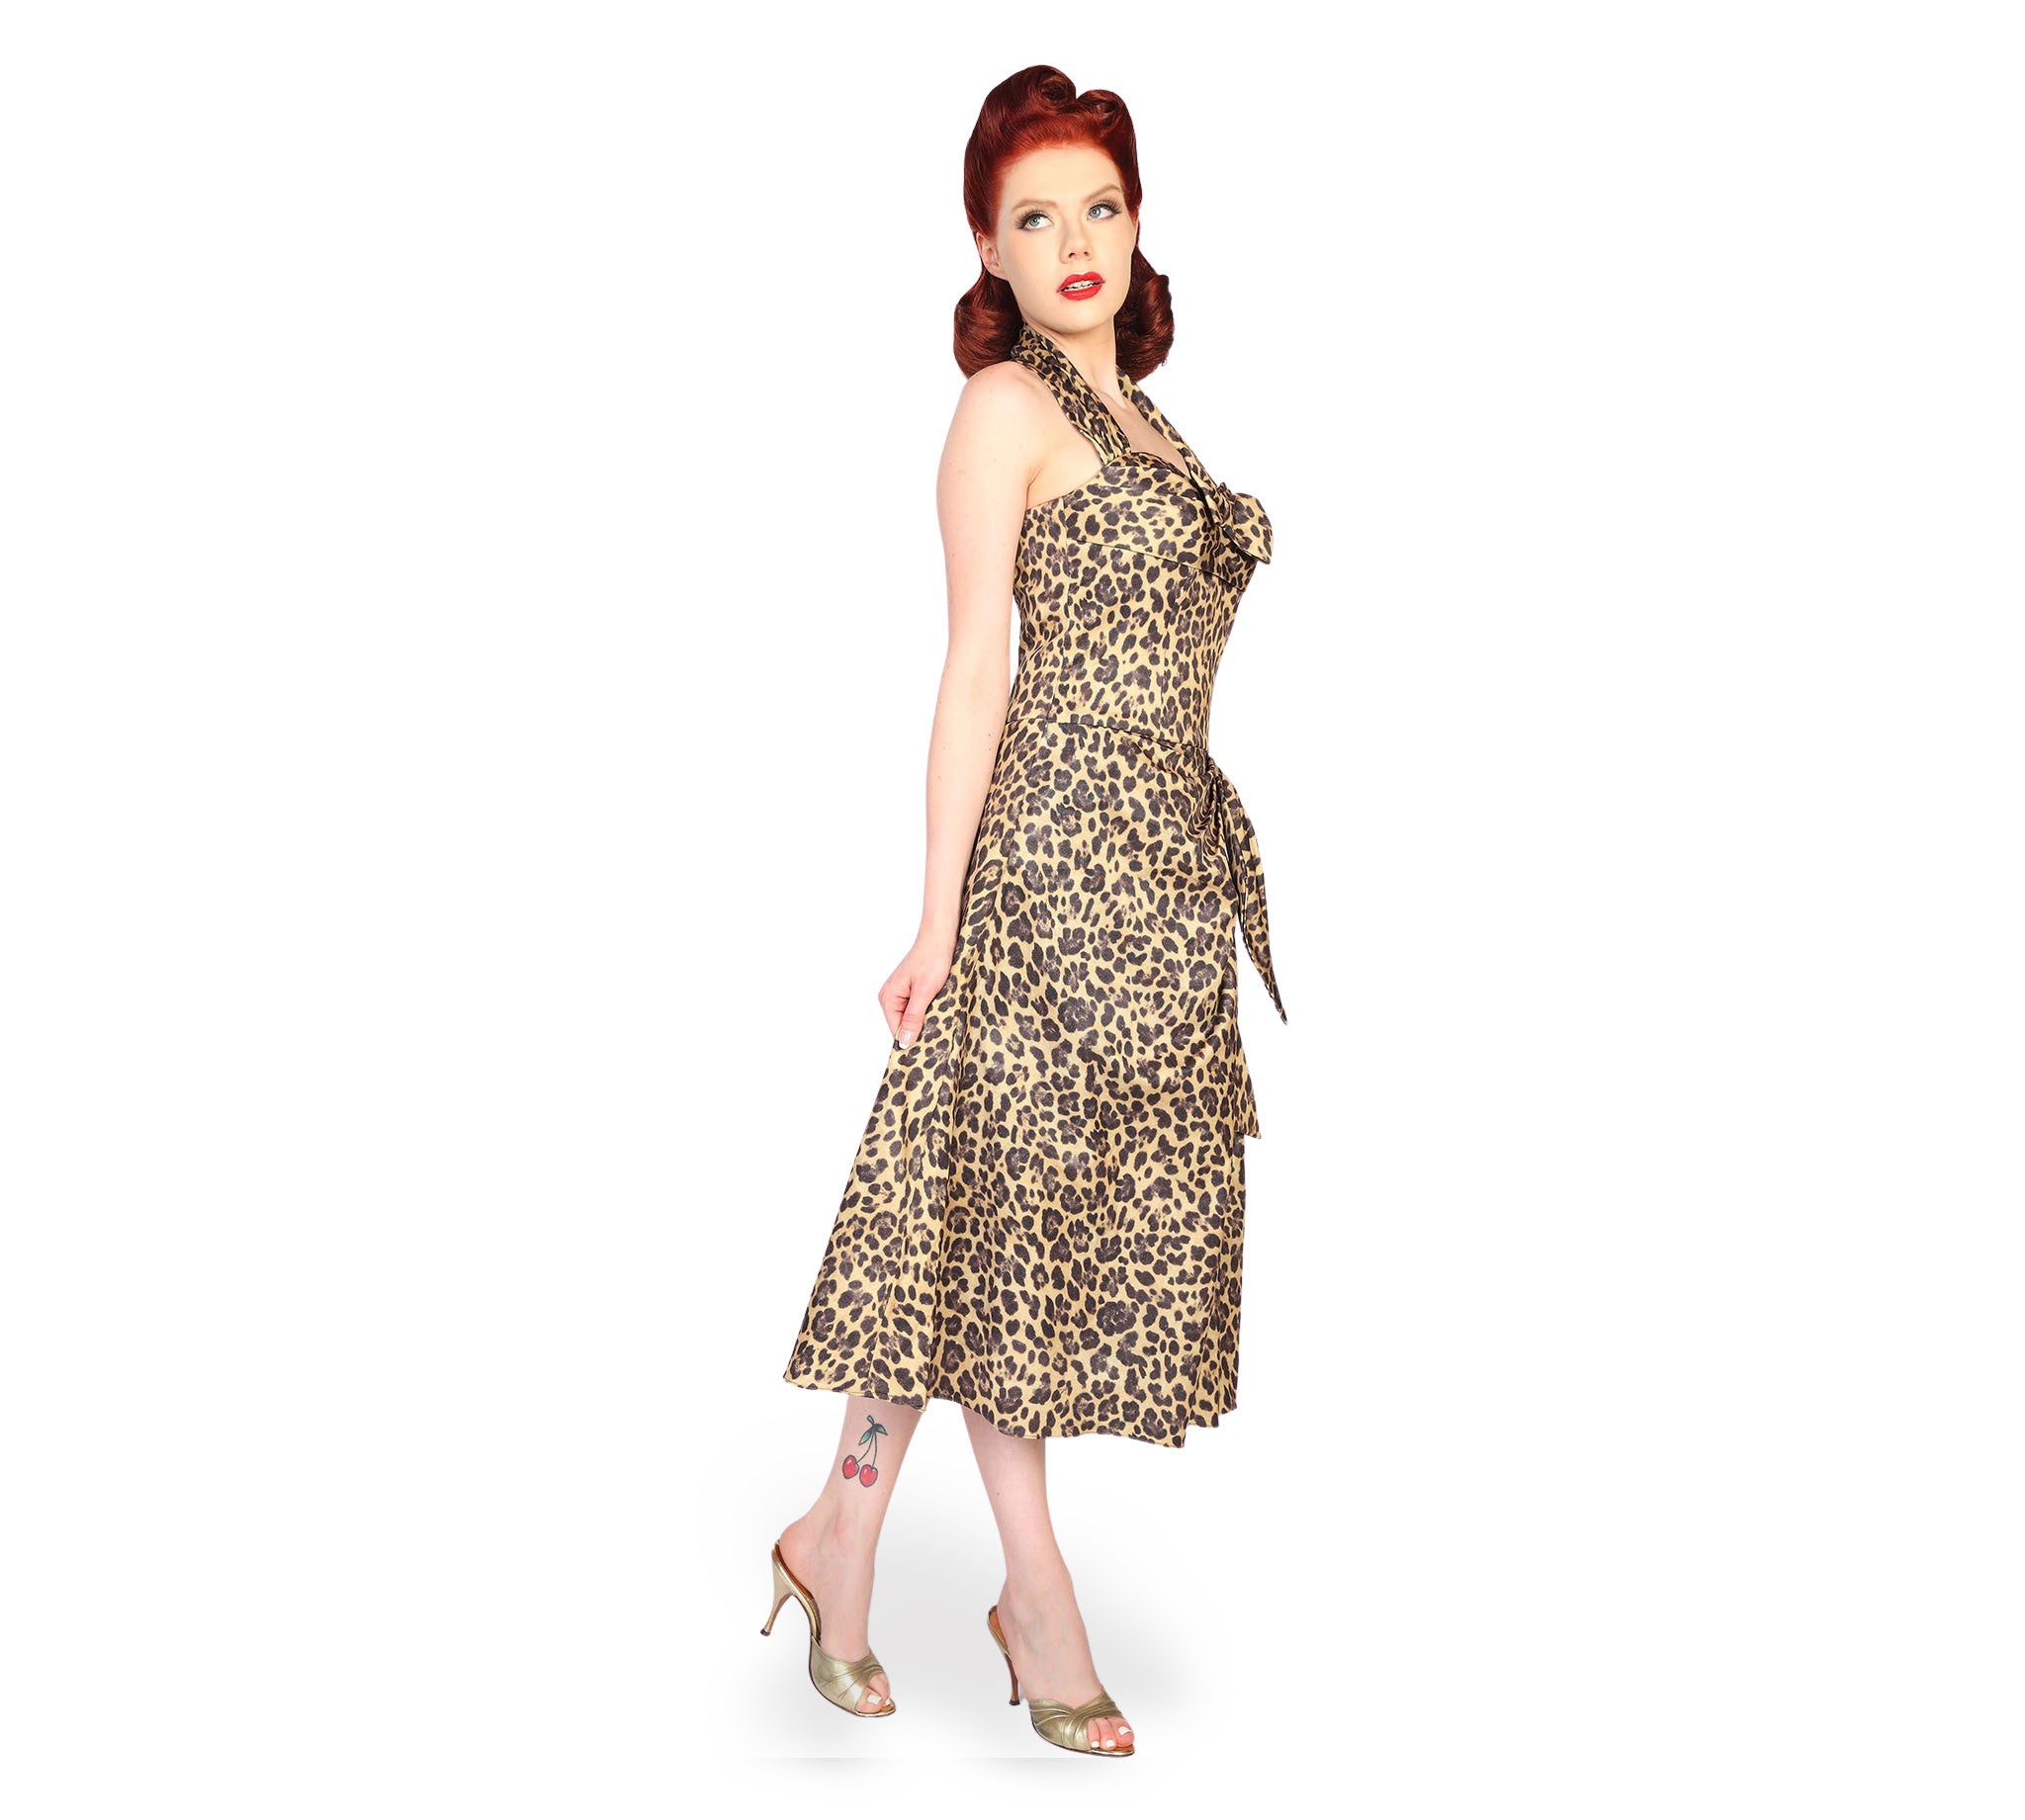 "Brighton" Leopard Cocktail Dress